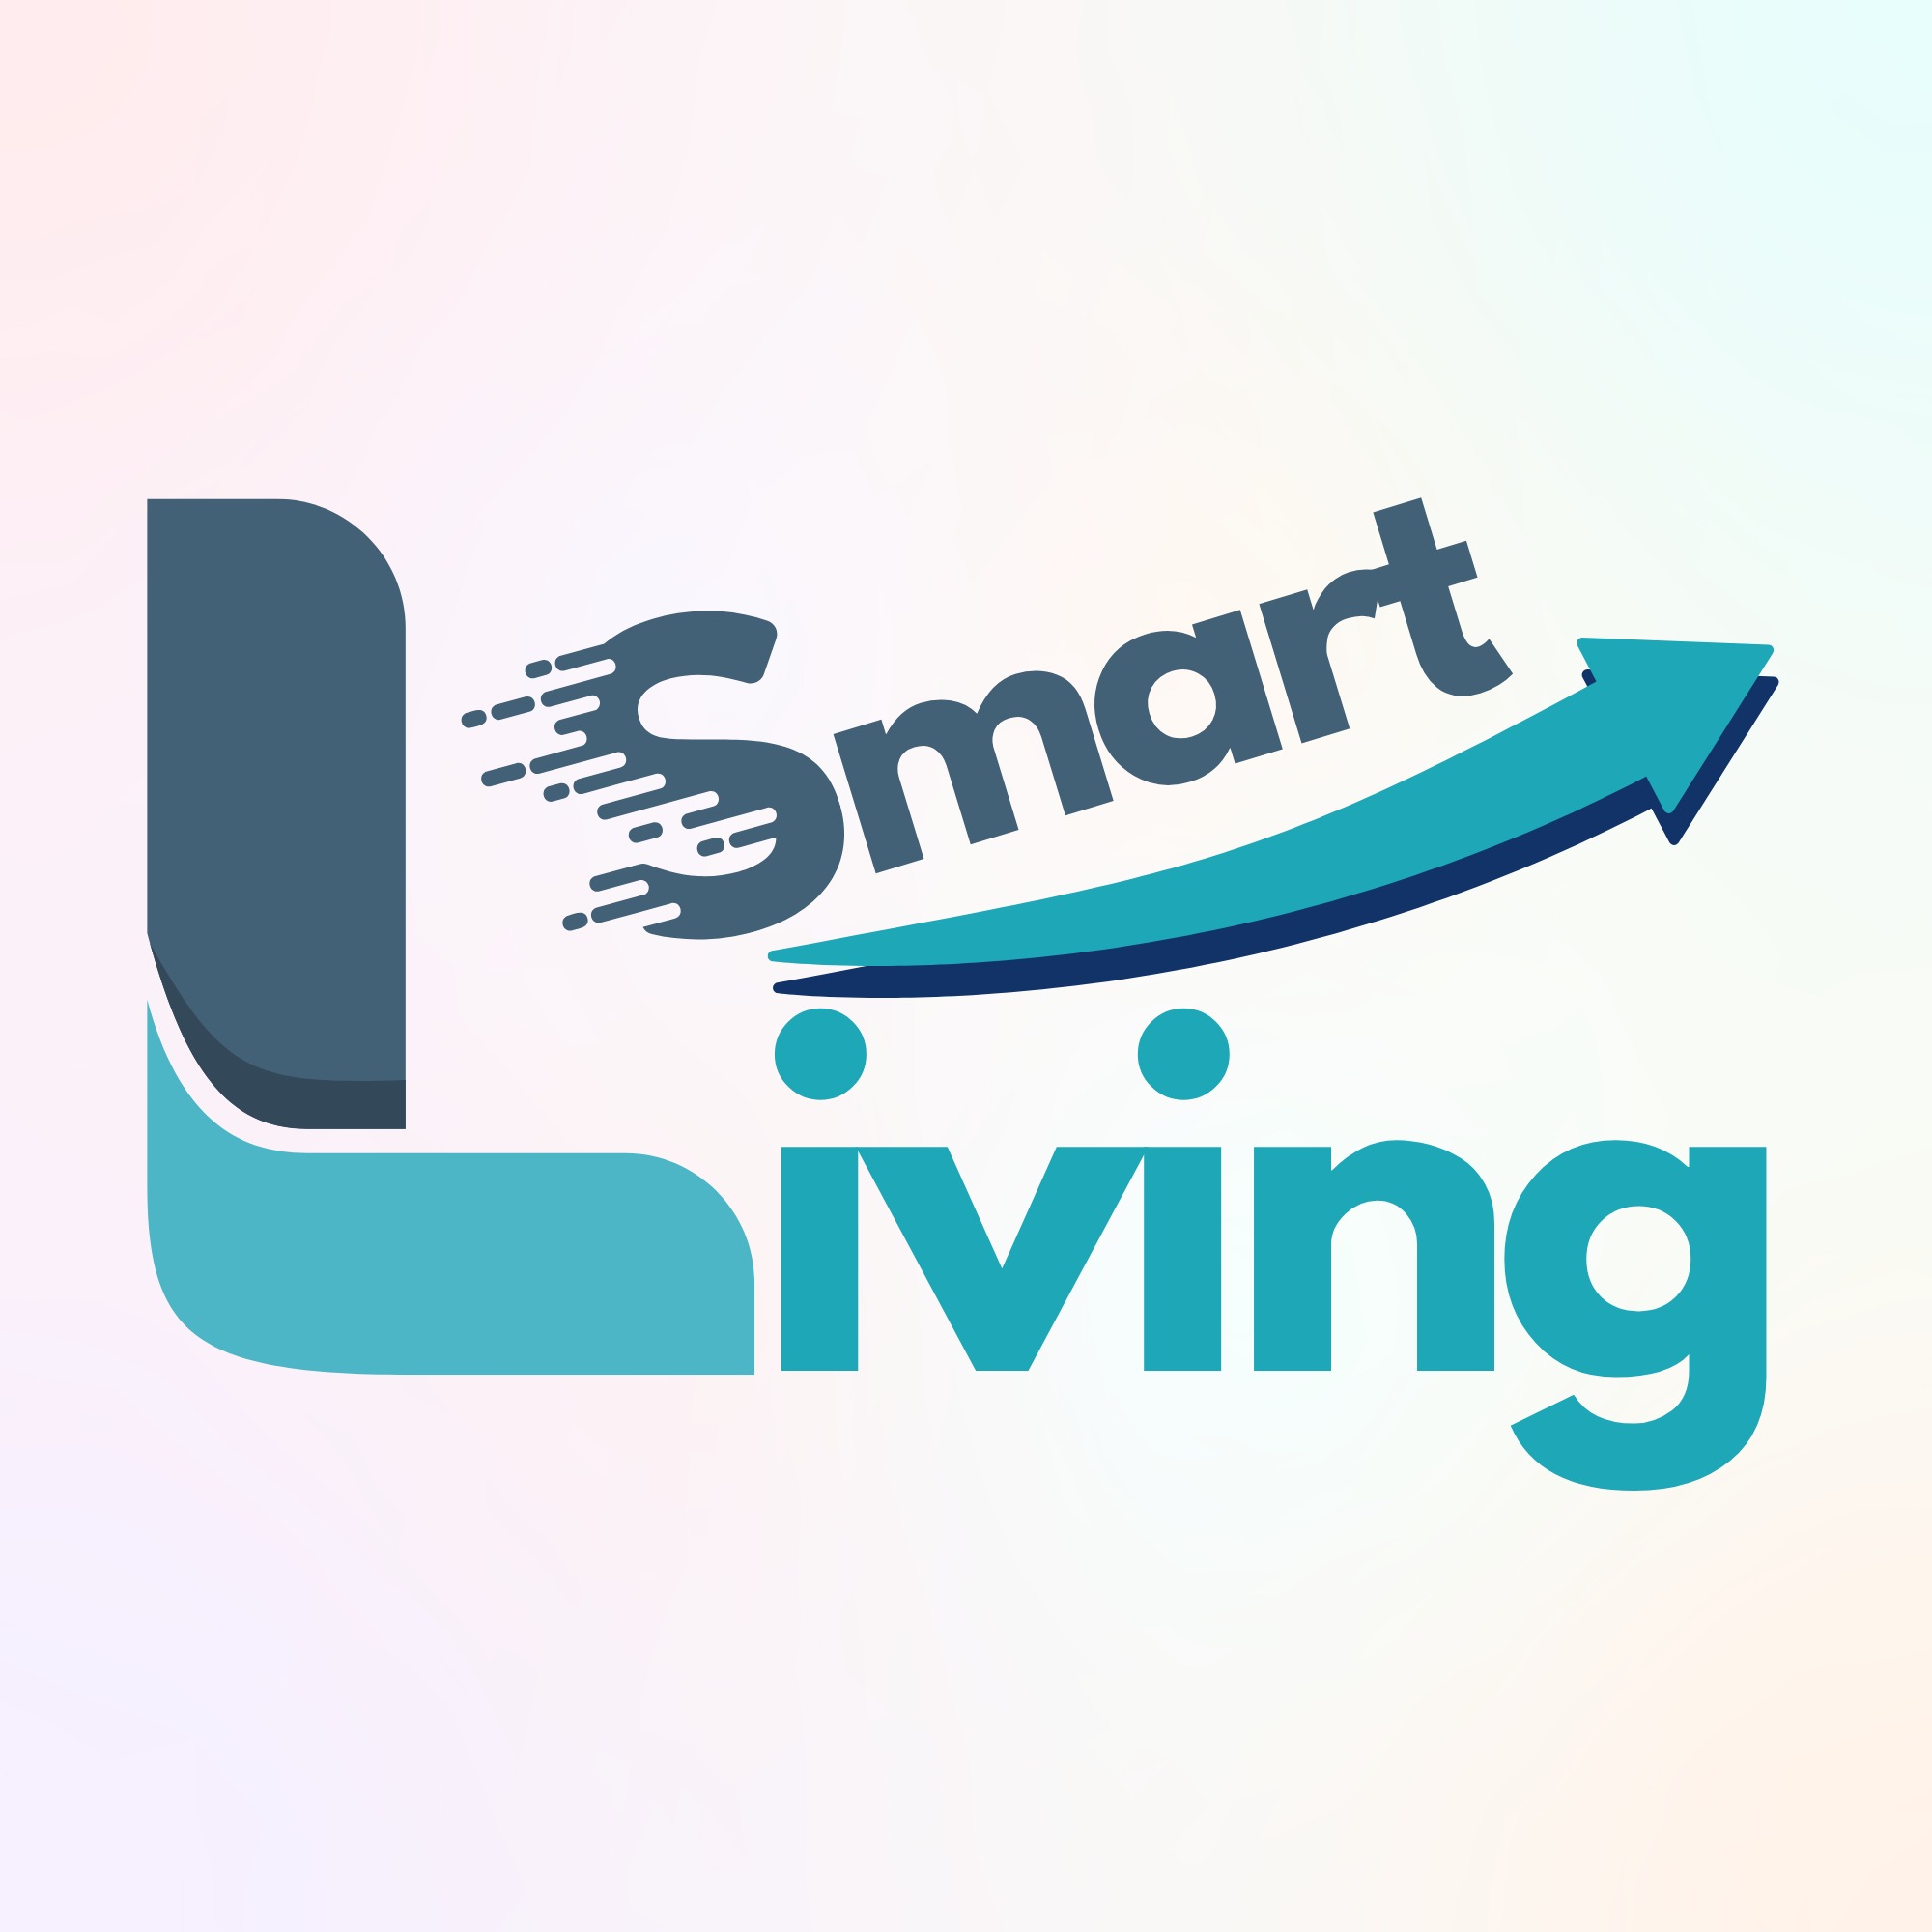 Smart Living Store